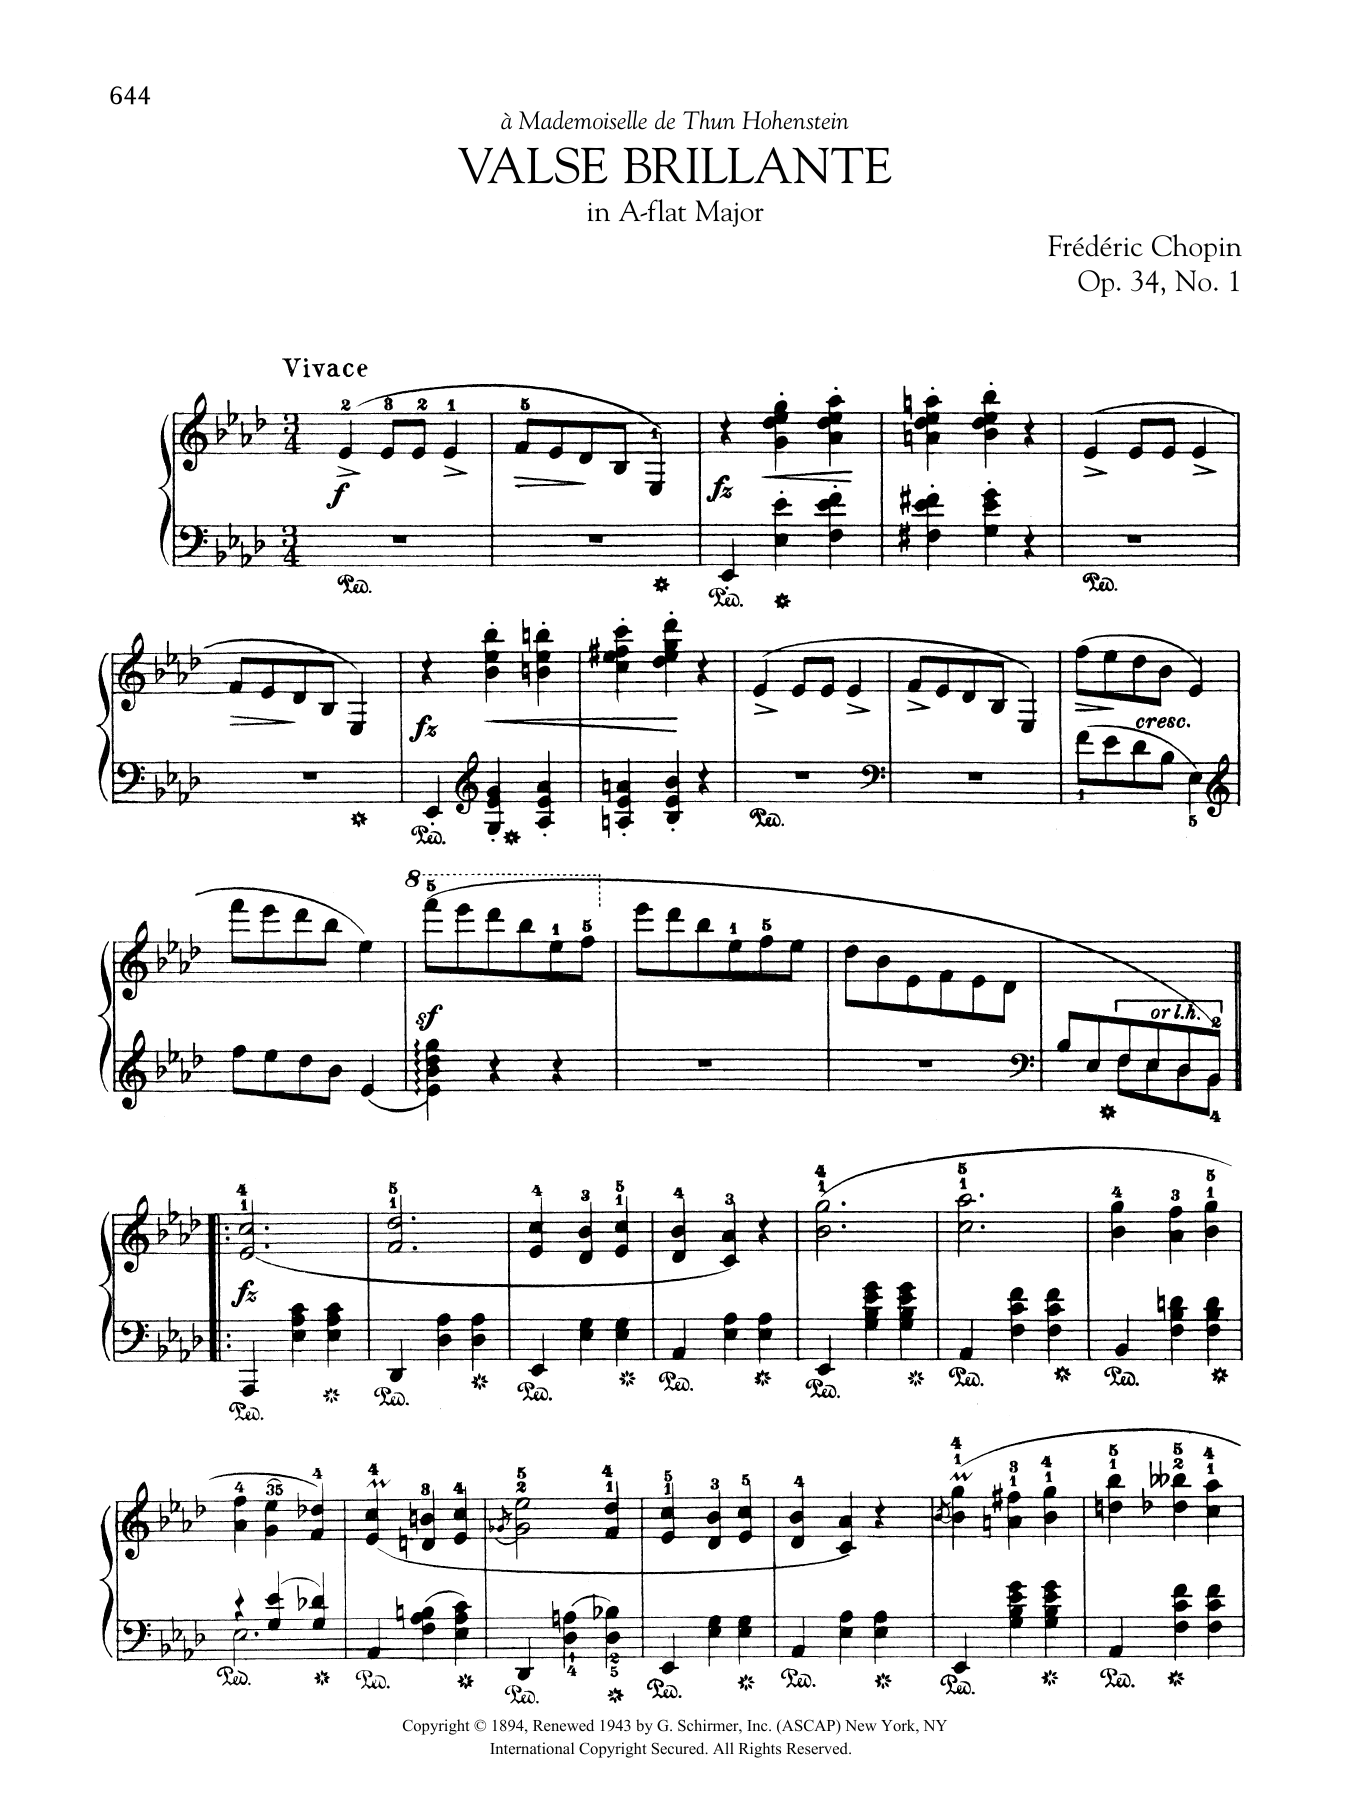 Valse brillante in A-flat Major, Op. 34, No. 1 sheet music